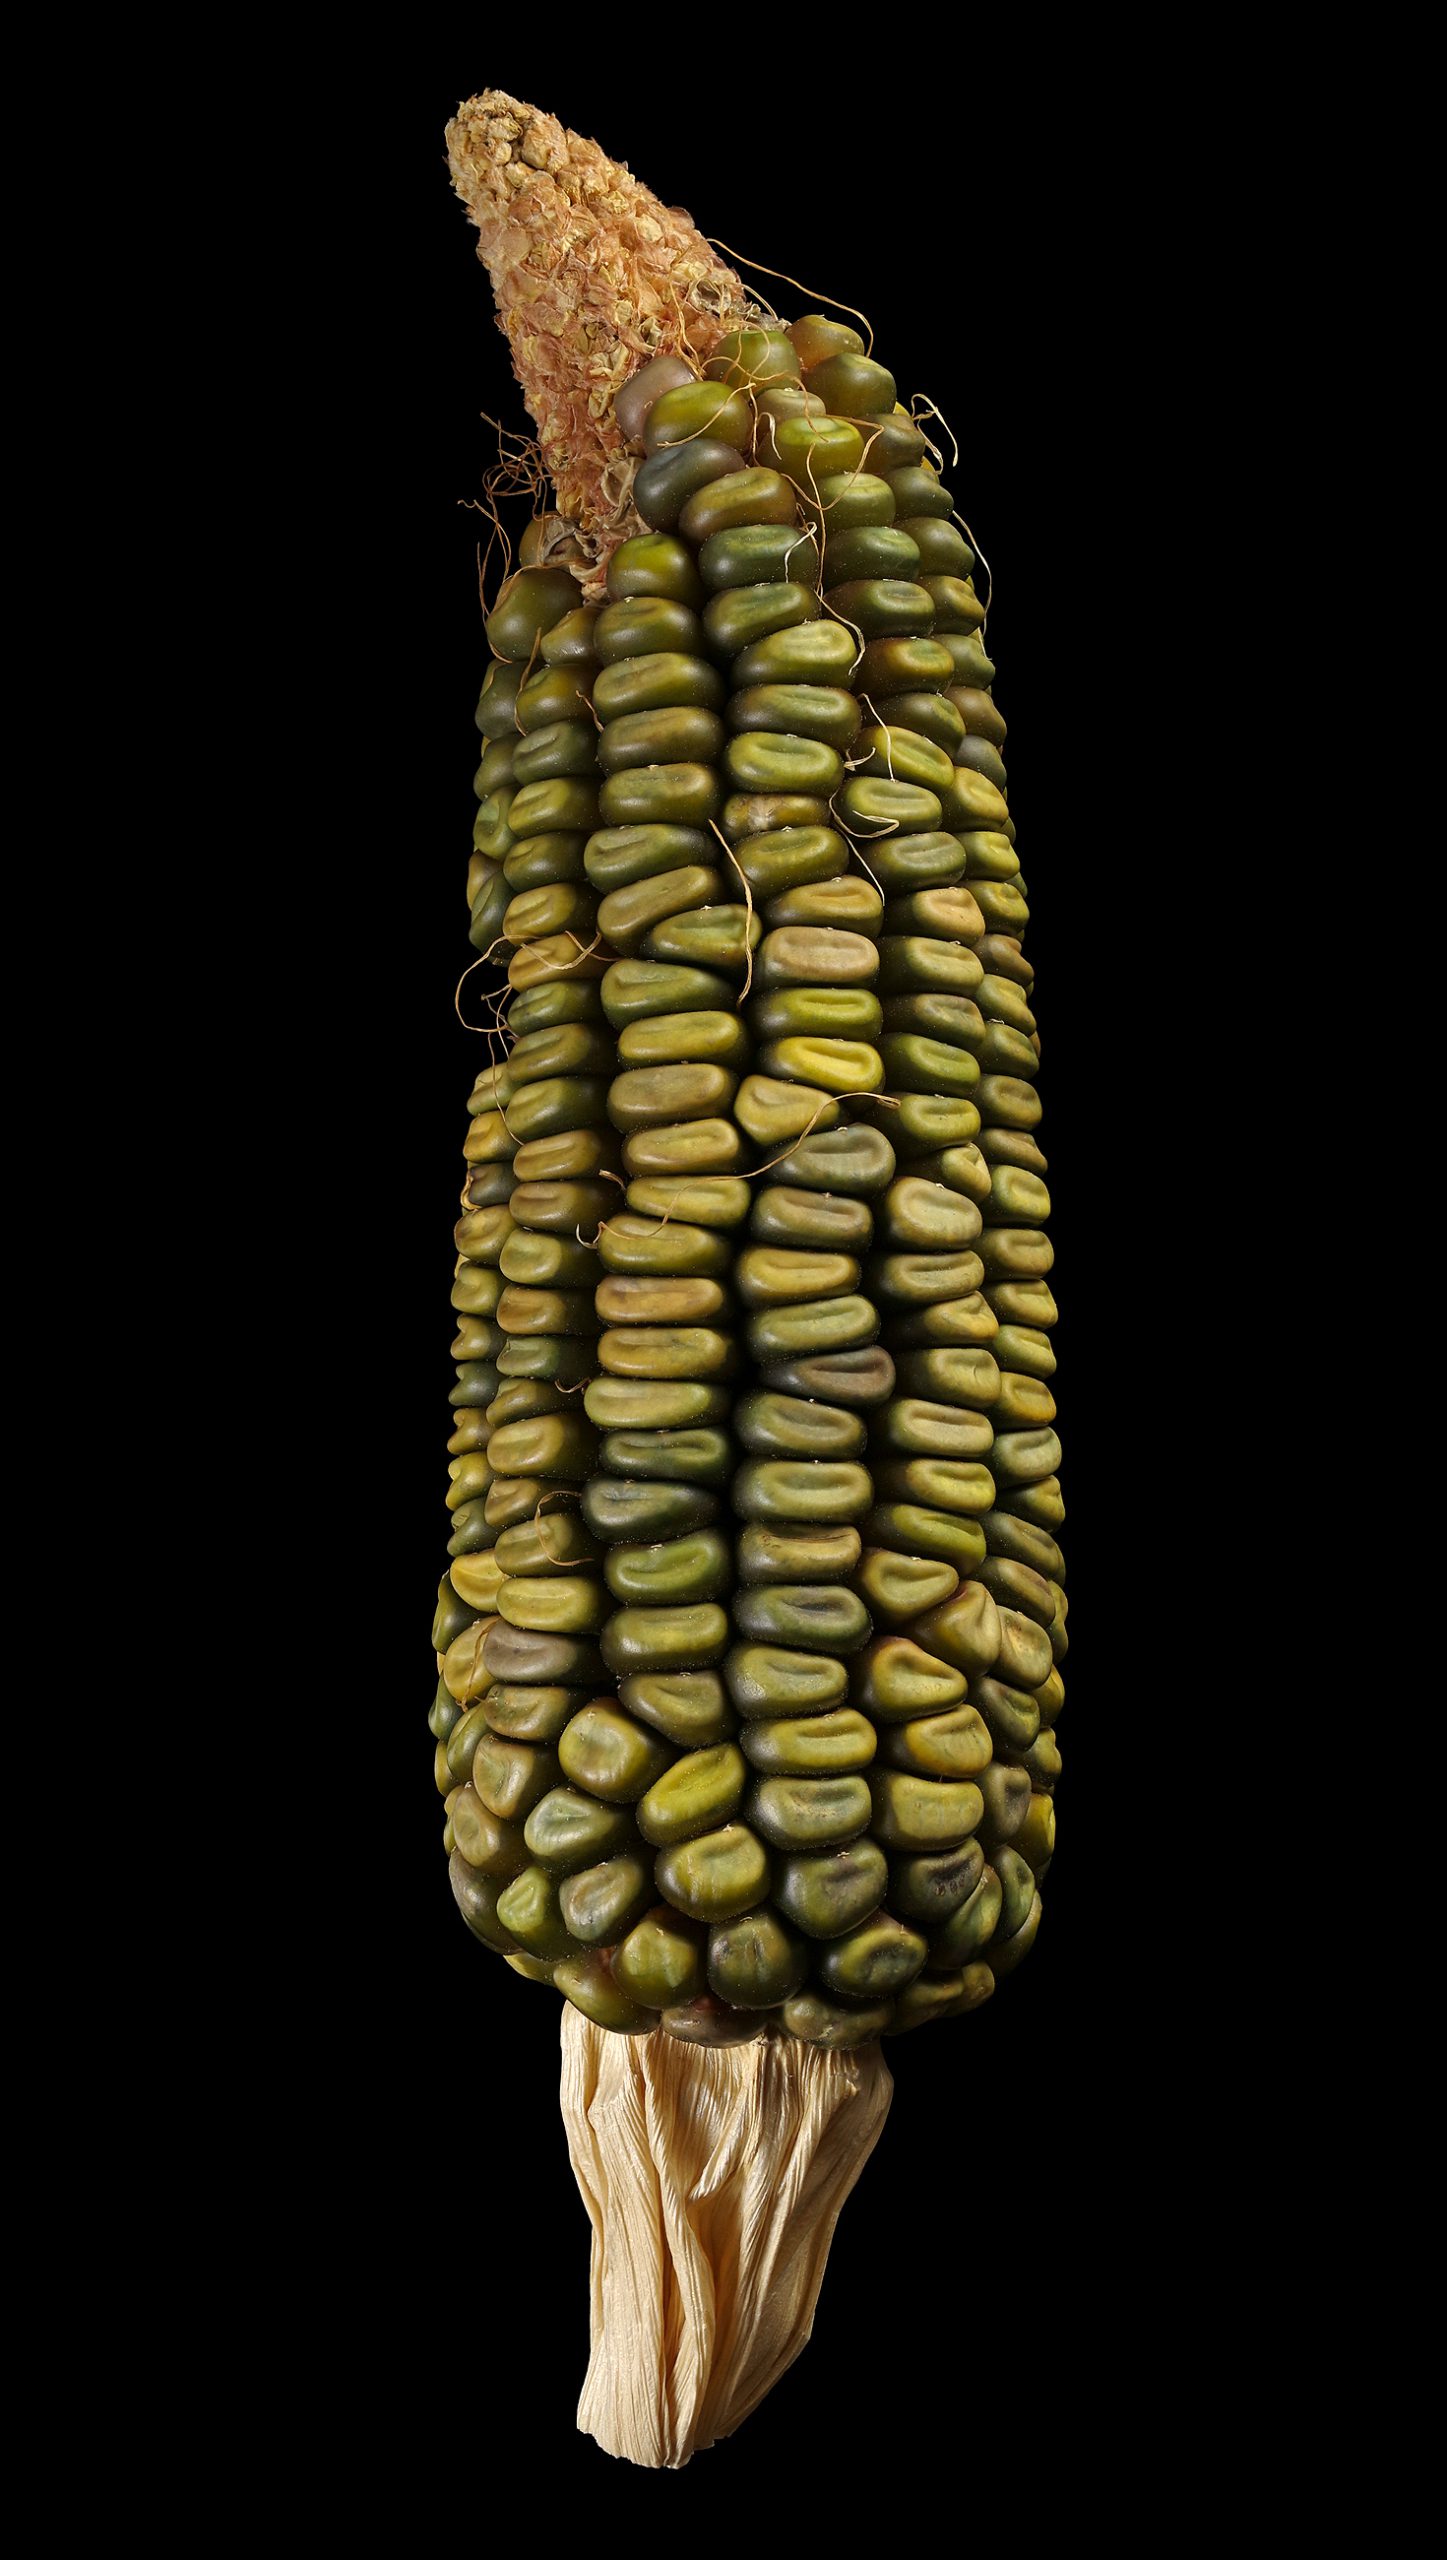 Oaxacan Green dent corn: Zea mays ssp. mays convar. indentata ‘Oaxacan Green’